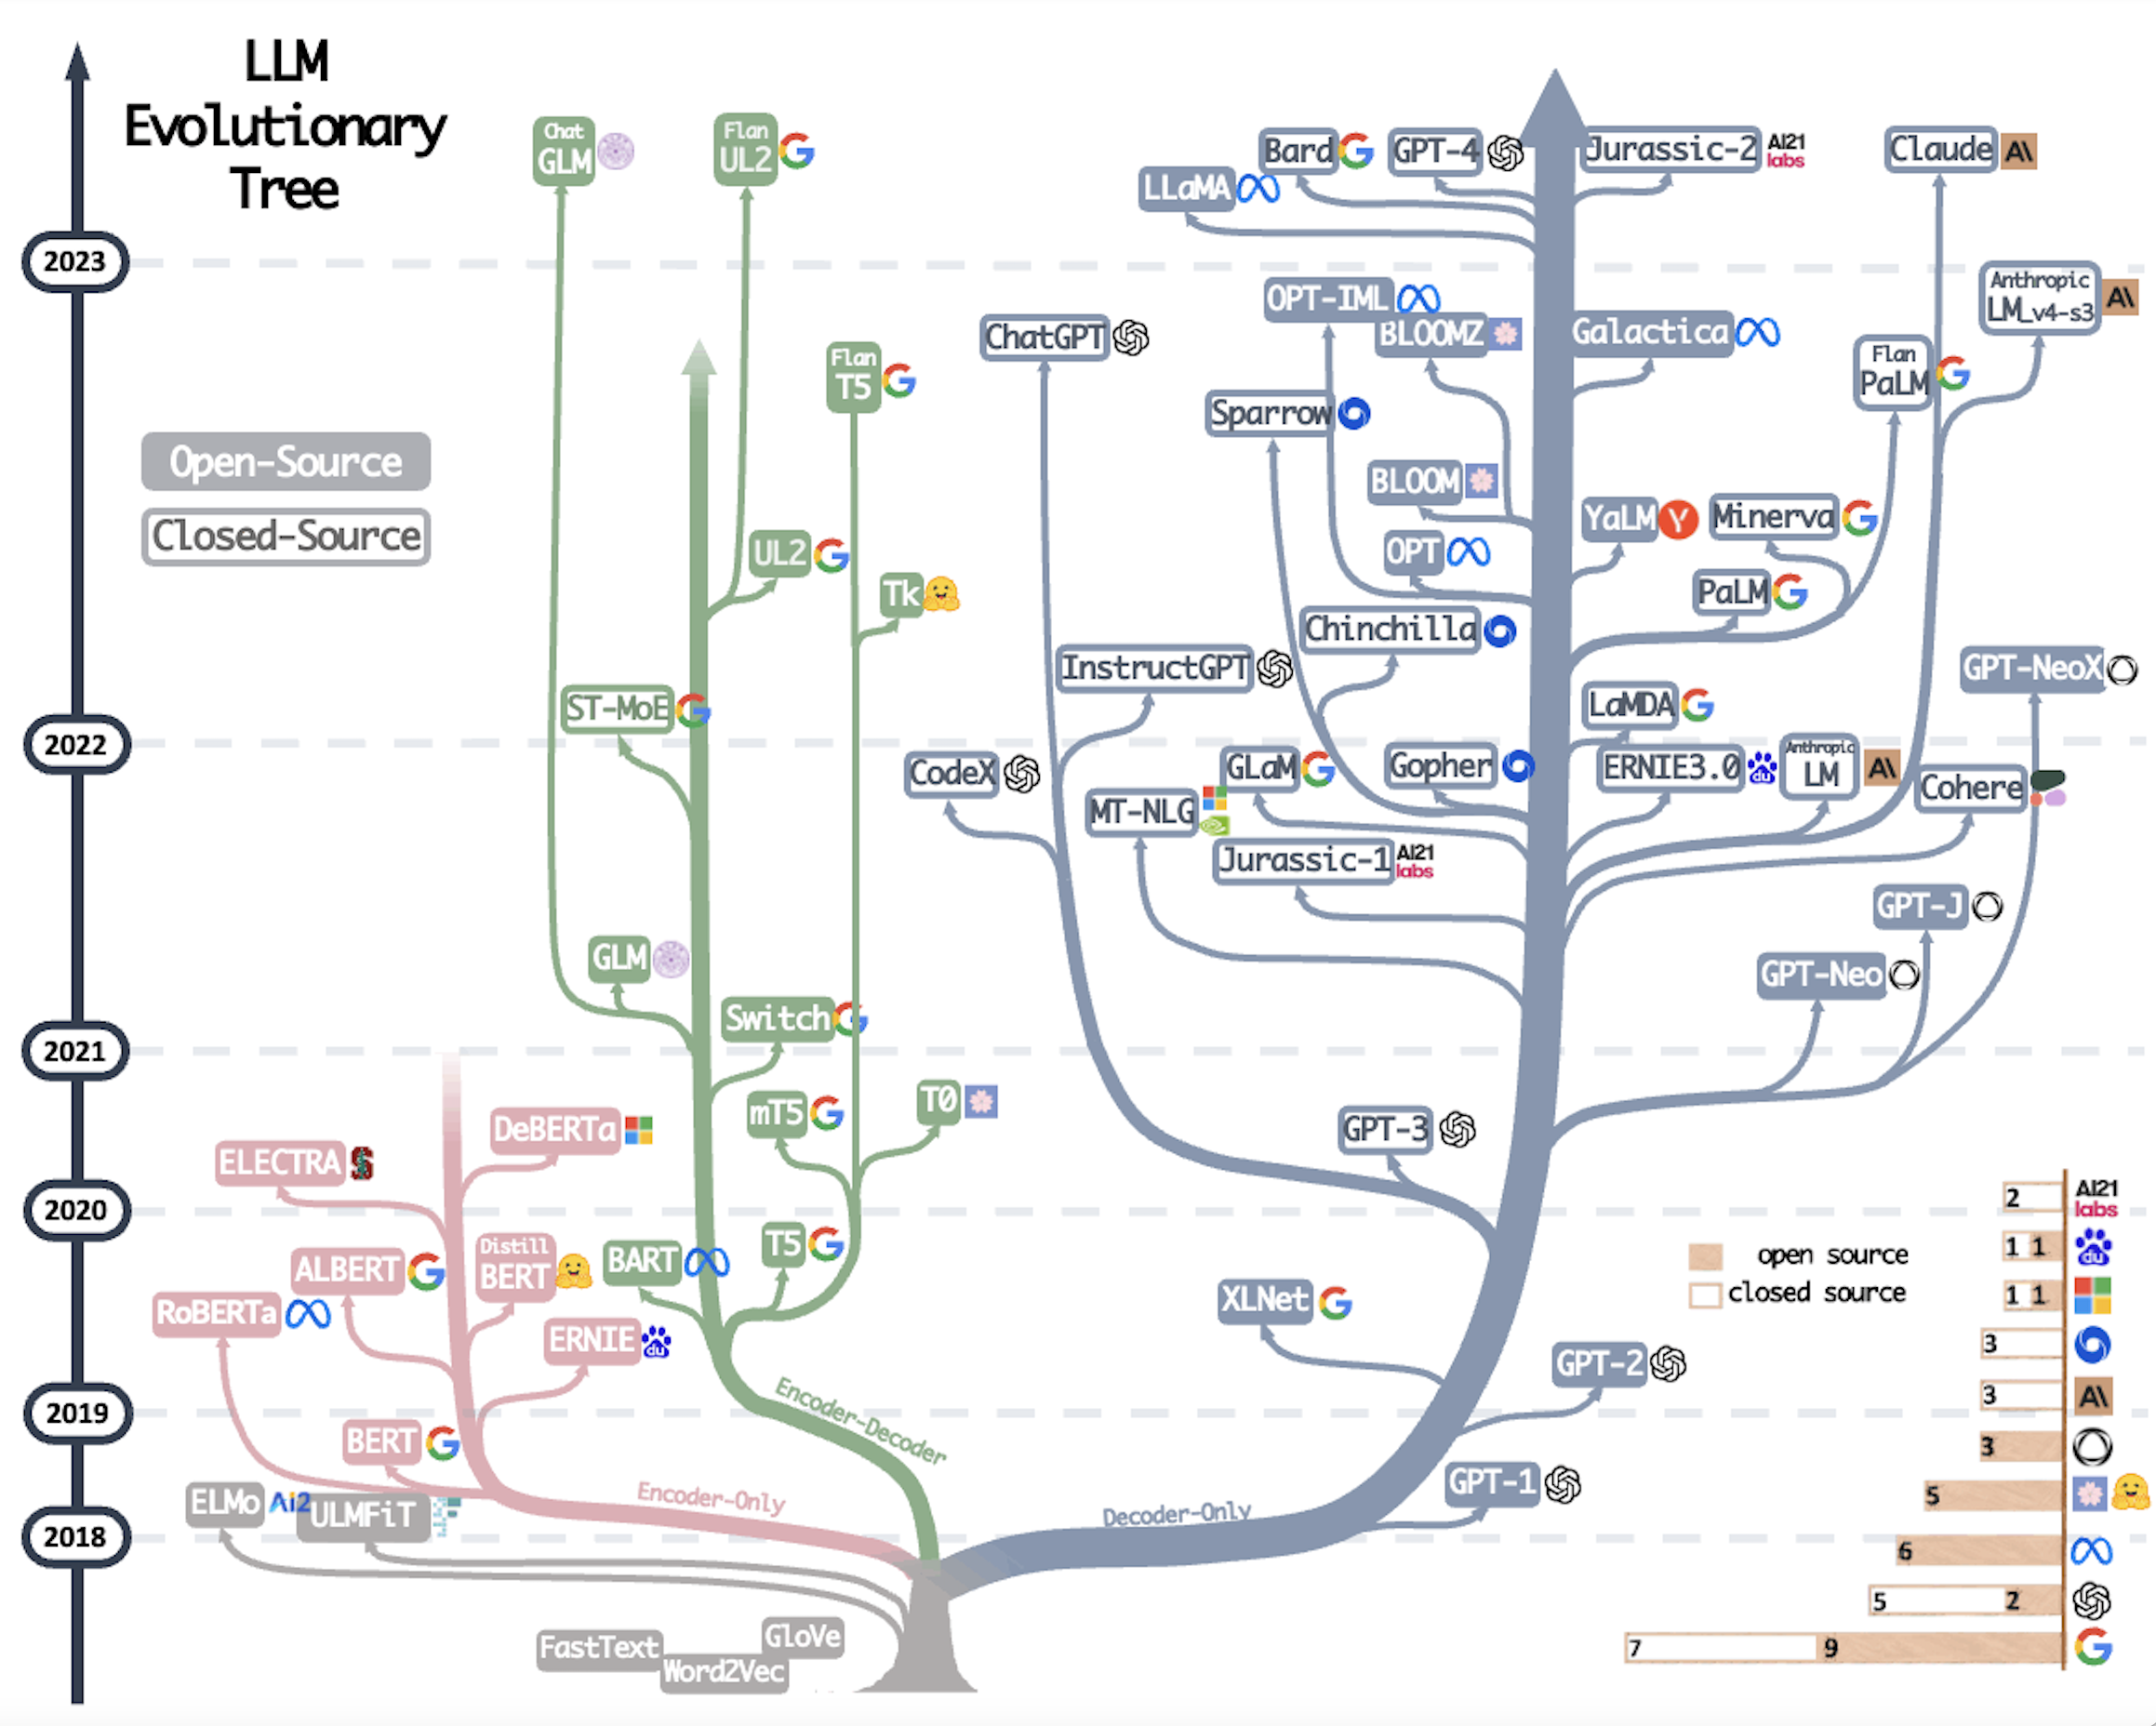 LLM Evolutionary Tree 